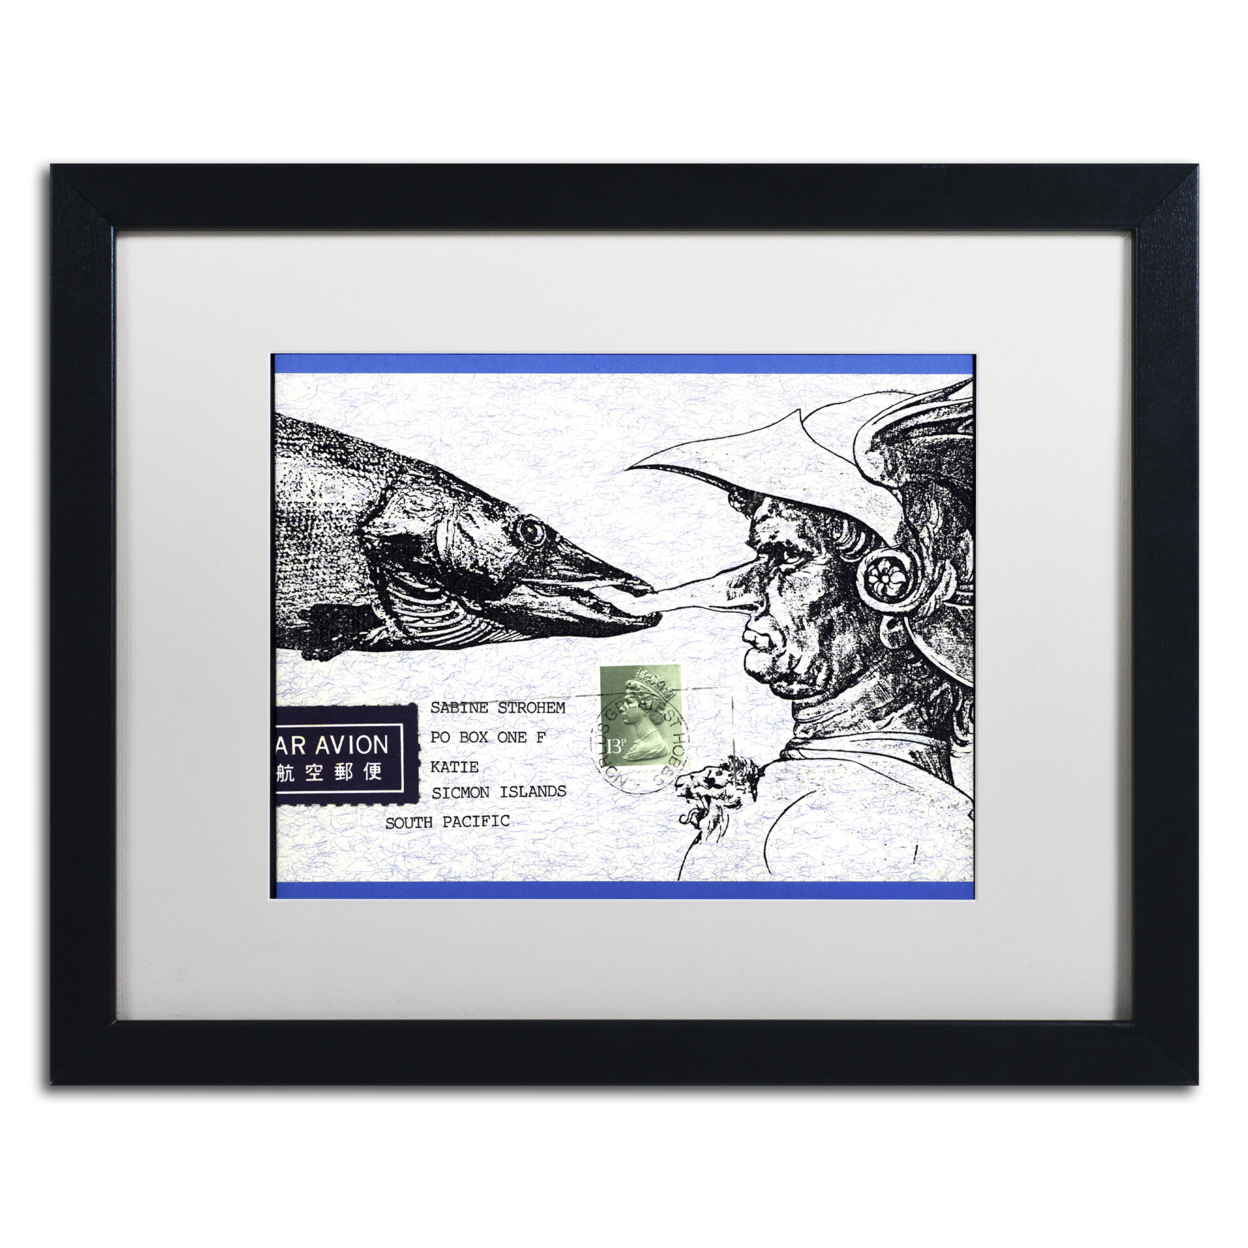 Nick Bantock 'Fish Nose' Black Wooden Framed Art 18 X 22 Inches